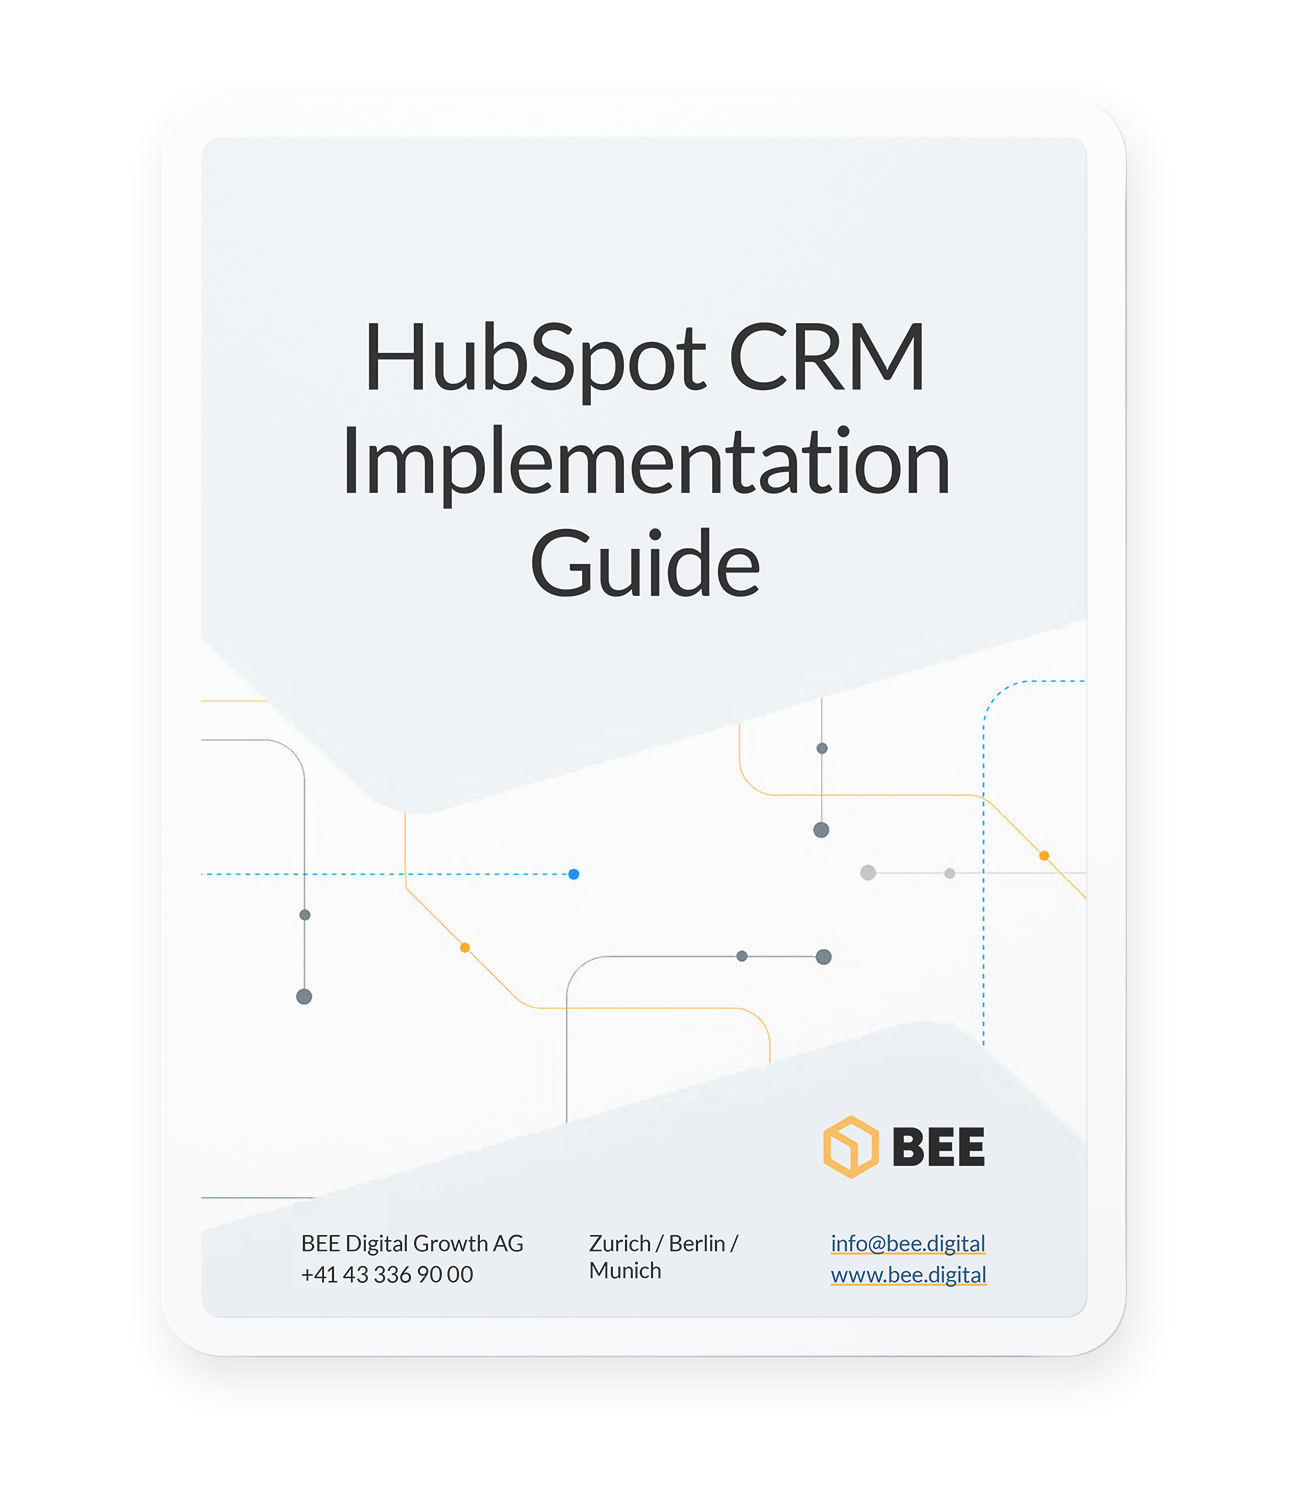 HubSpot CRM Implementation Guide